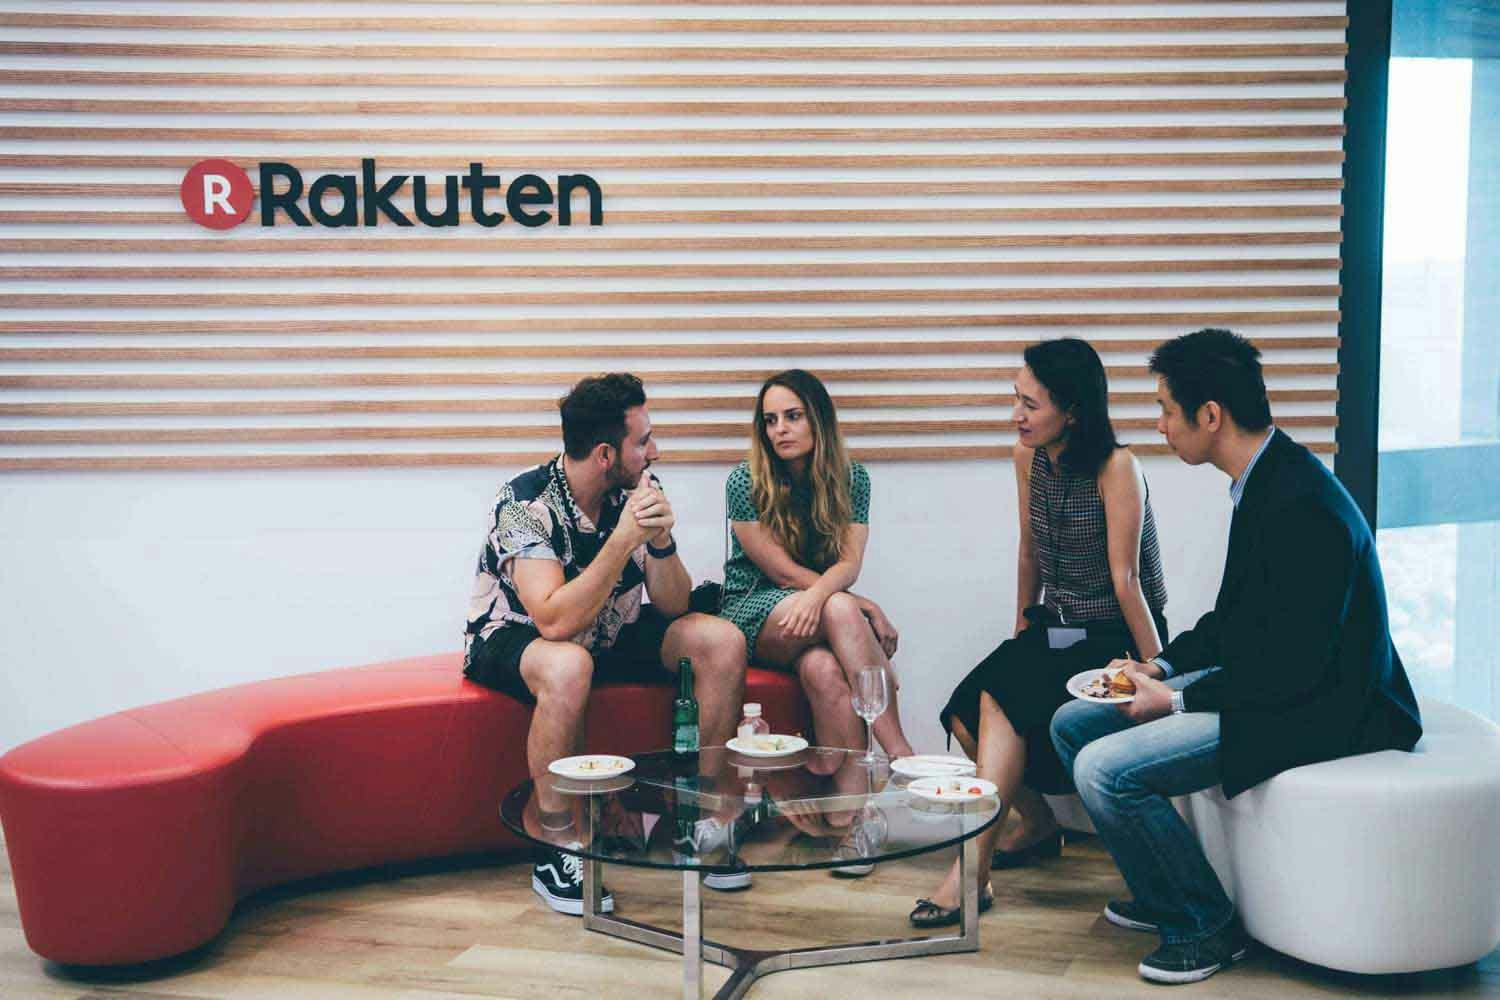  Marketing Symposium for Rakuten Marketing Asia-Pacific in Singapore